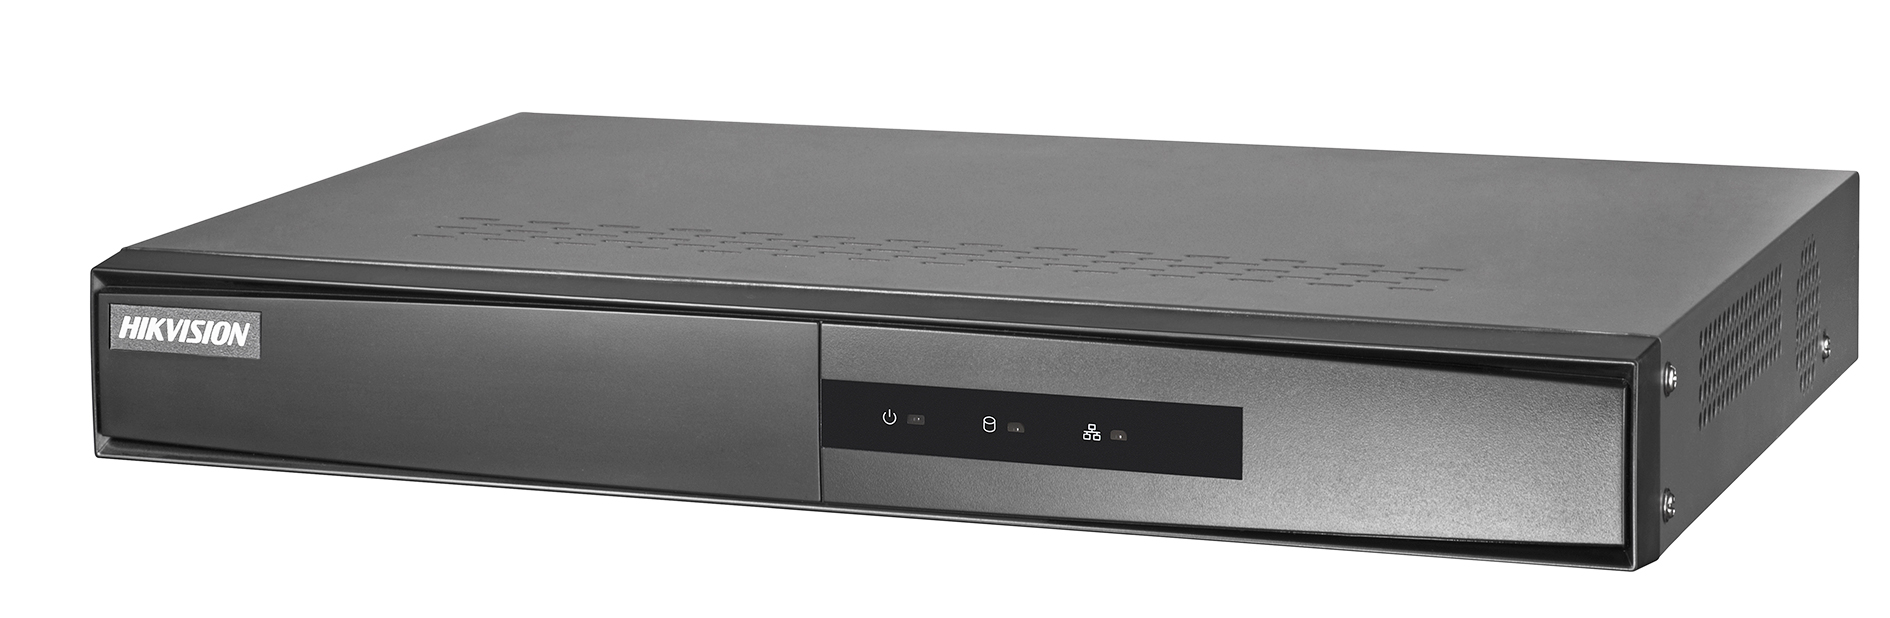 Hikvision DS-7104NI-Q1/4P/M. 4-х канальный IP-видеорегистратор c PoE